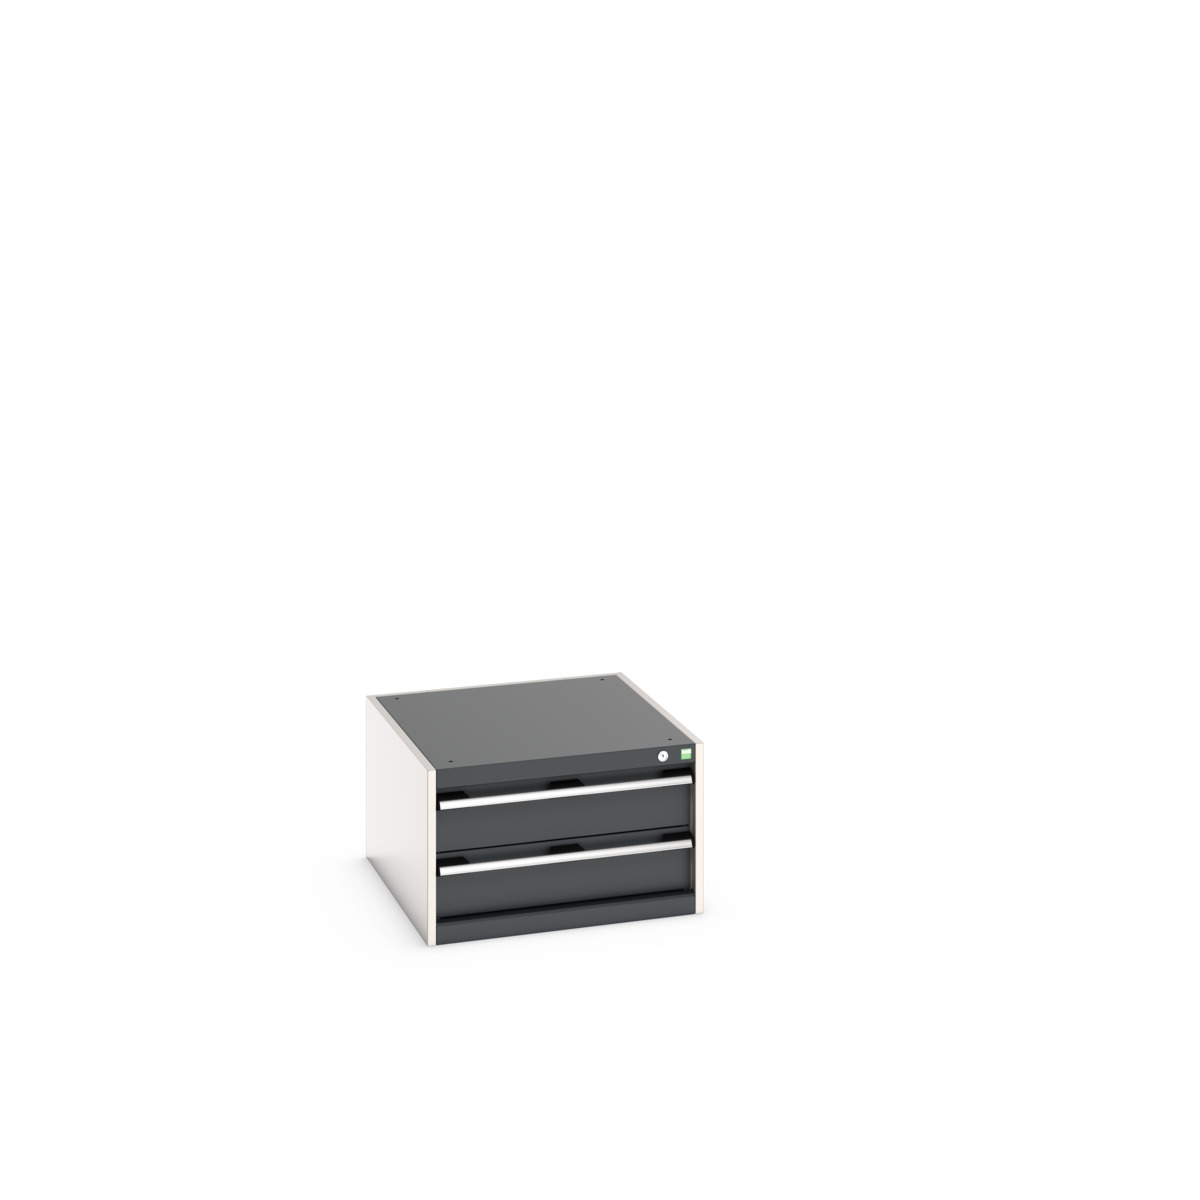 40027108. - cubio drawer cabinet 